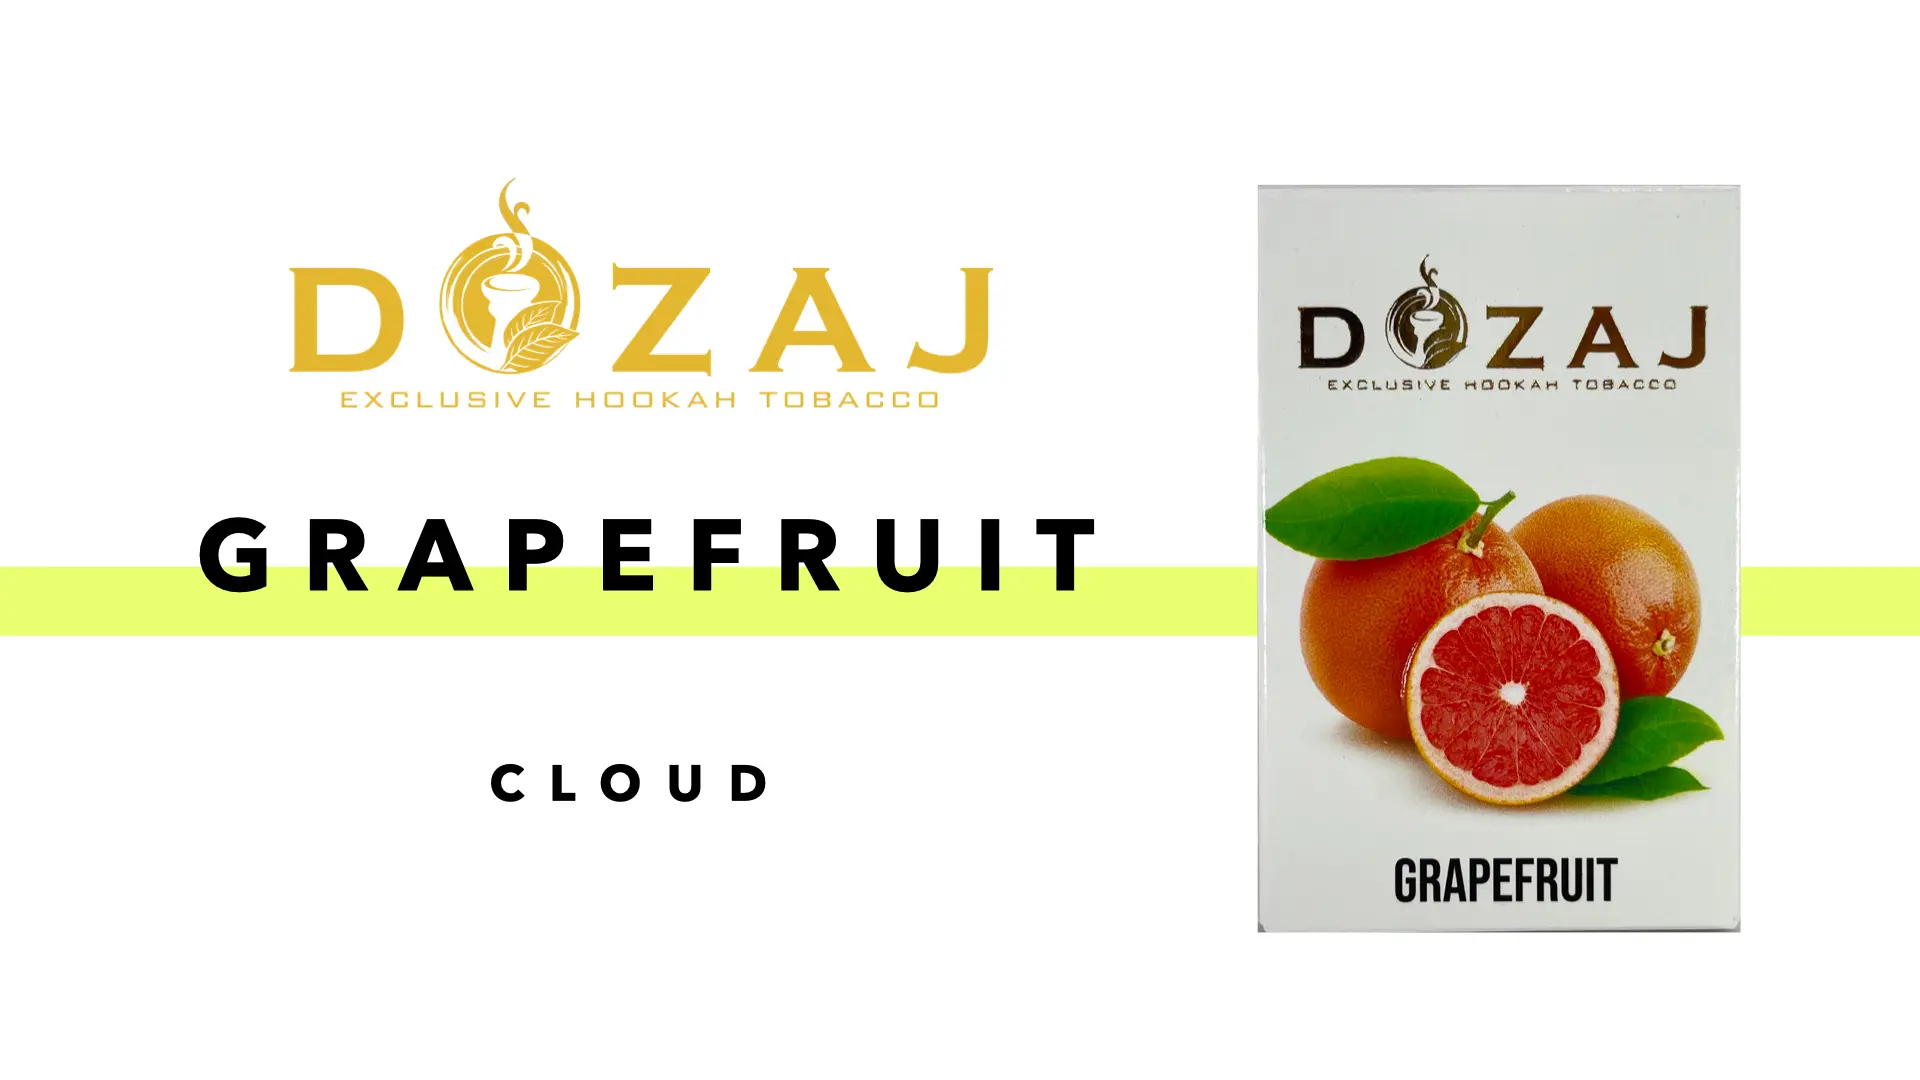 DOZAJ – Grapefruit(グレープフルーツ)レビュー